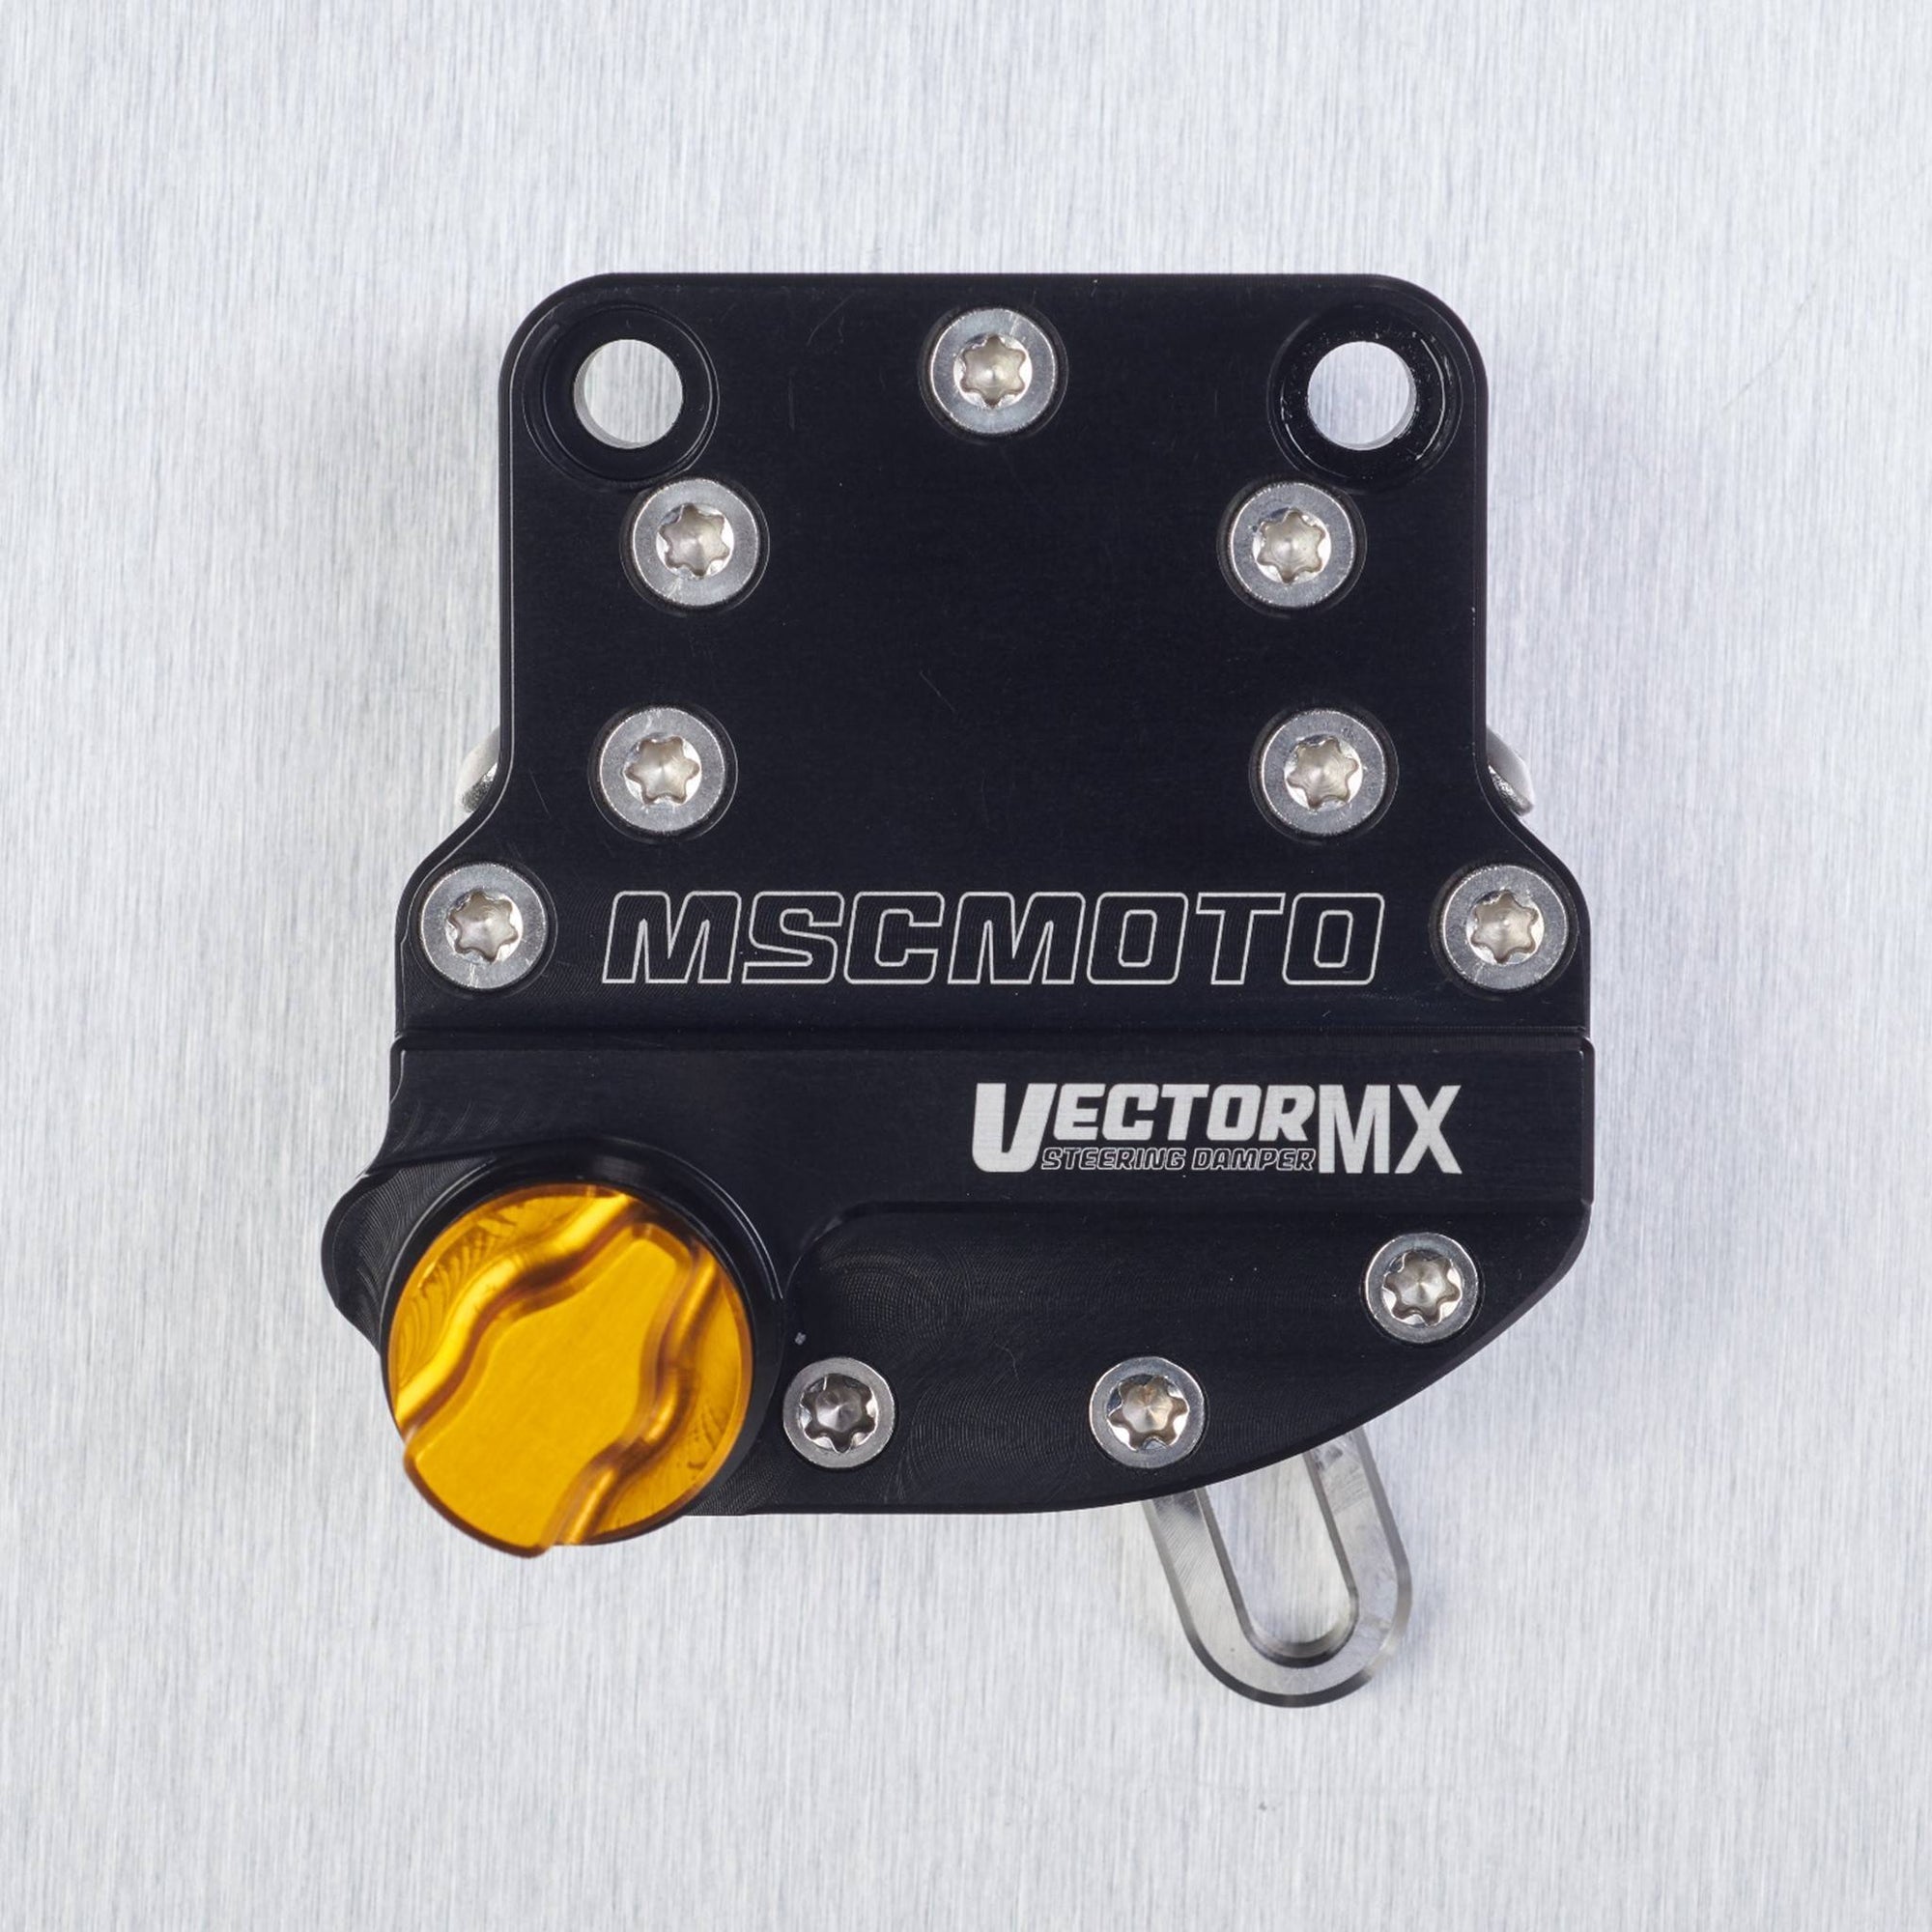 mscmotousa, VectorMX Steering Damper Kit "Down Under" Mount (VEC0013) - KTM 65 SX, HUSQVARNA TC 65, VEC0013, husqvarna, husqvarna-2017-tc-65-esi4628326, ktm, vectormx, , Imported and distributed in North & South America by Lindeco Genuine Powersports.